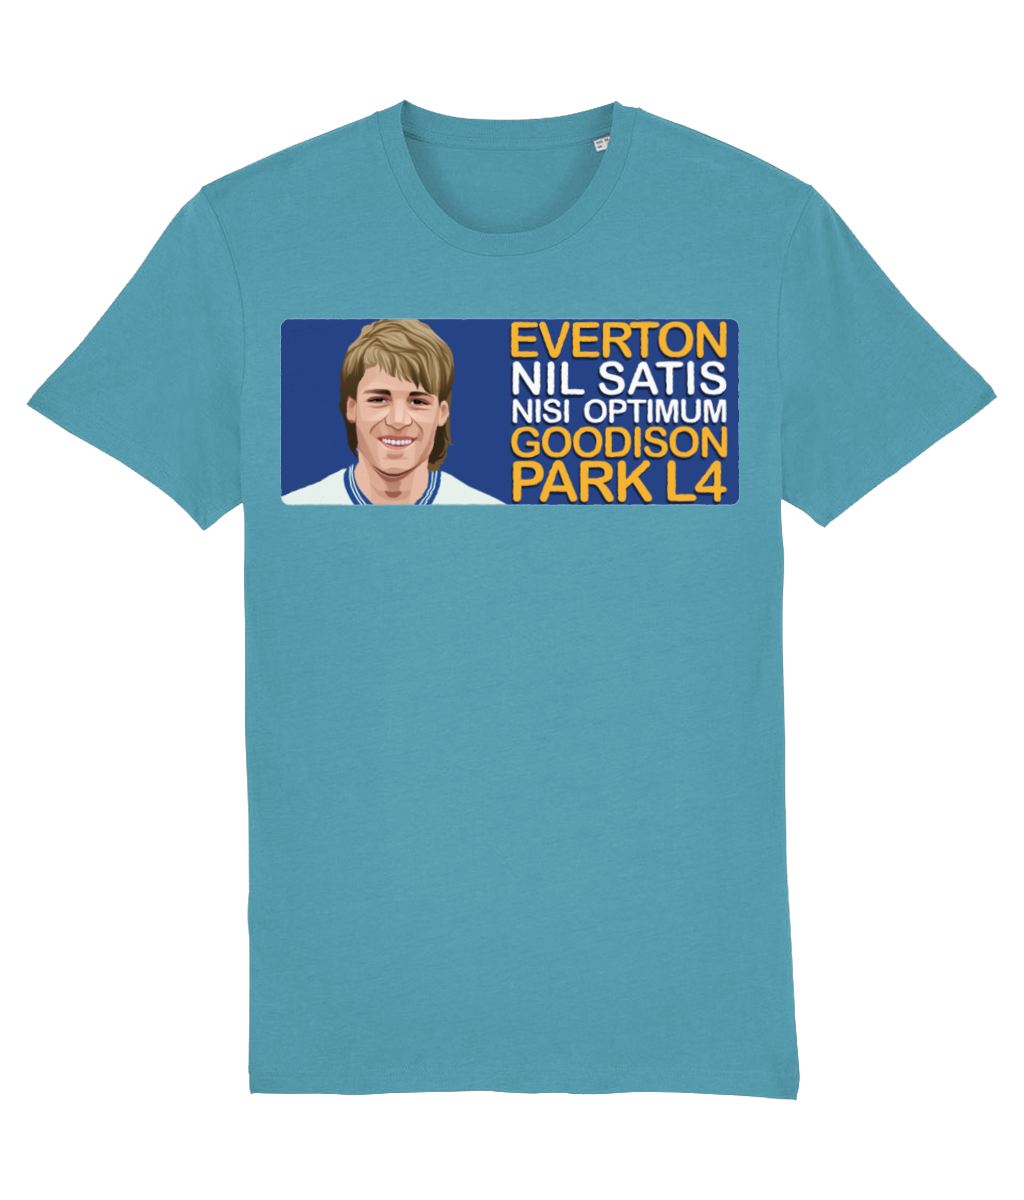 Everton 'Psycho' Pat van den Hauwe Goodison Park L4 Unisex T-Shirt Stanley/Stella Retrotext Atlantic Blue XX-Small 